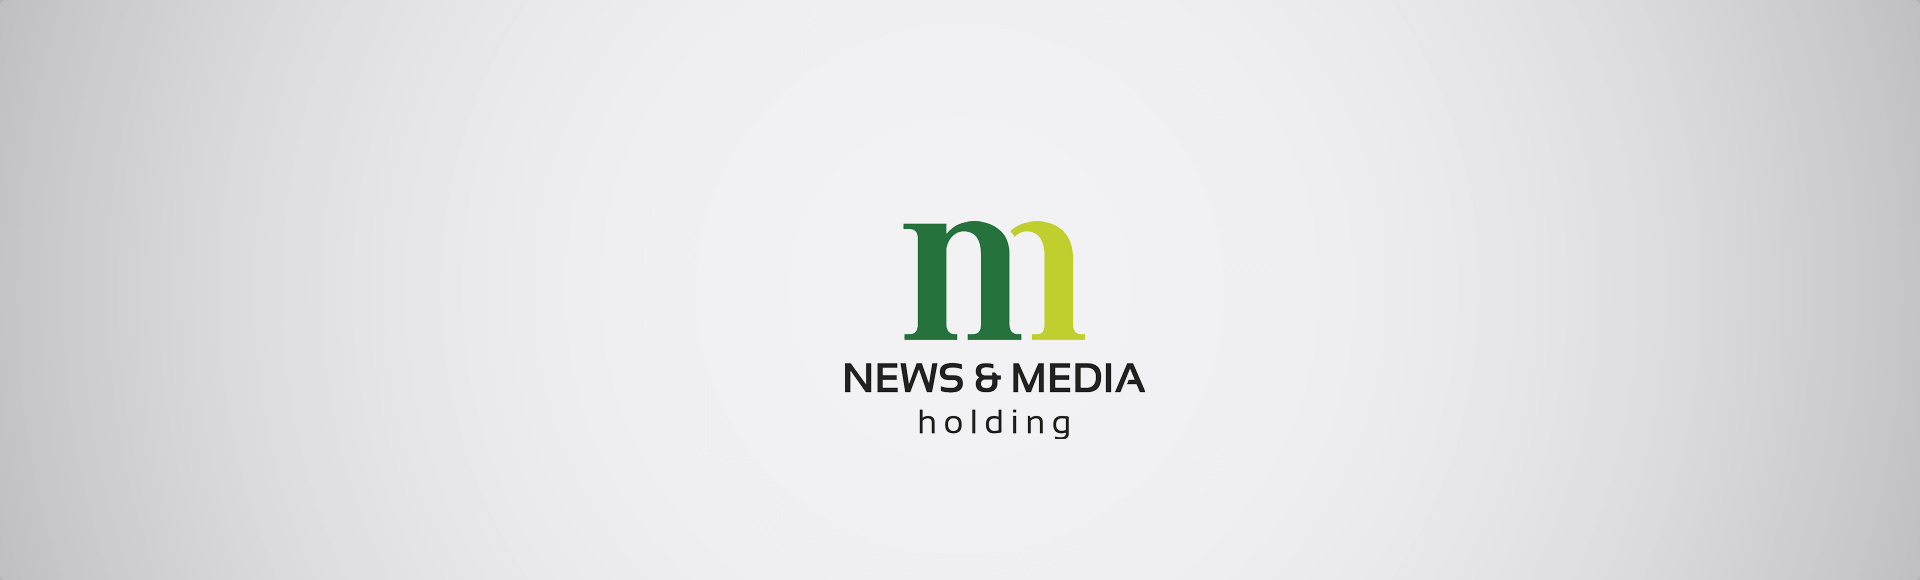 news-media-holding